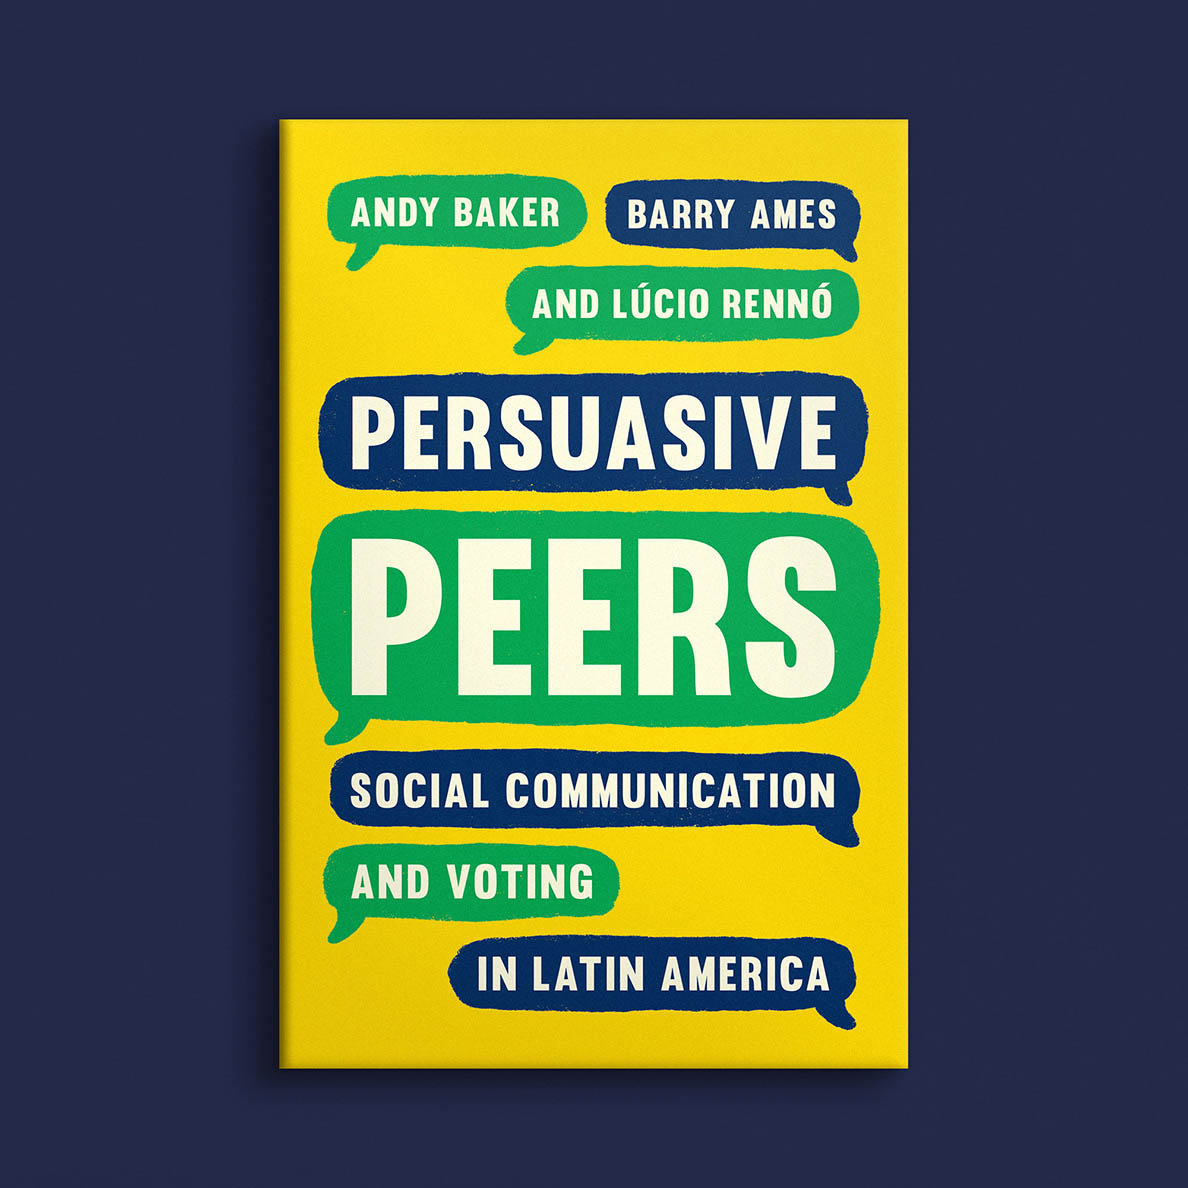 Persuasive Peers book cover